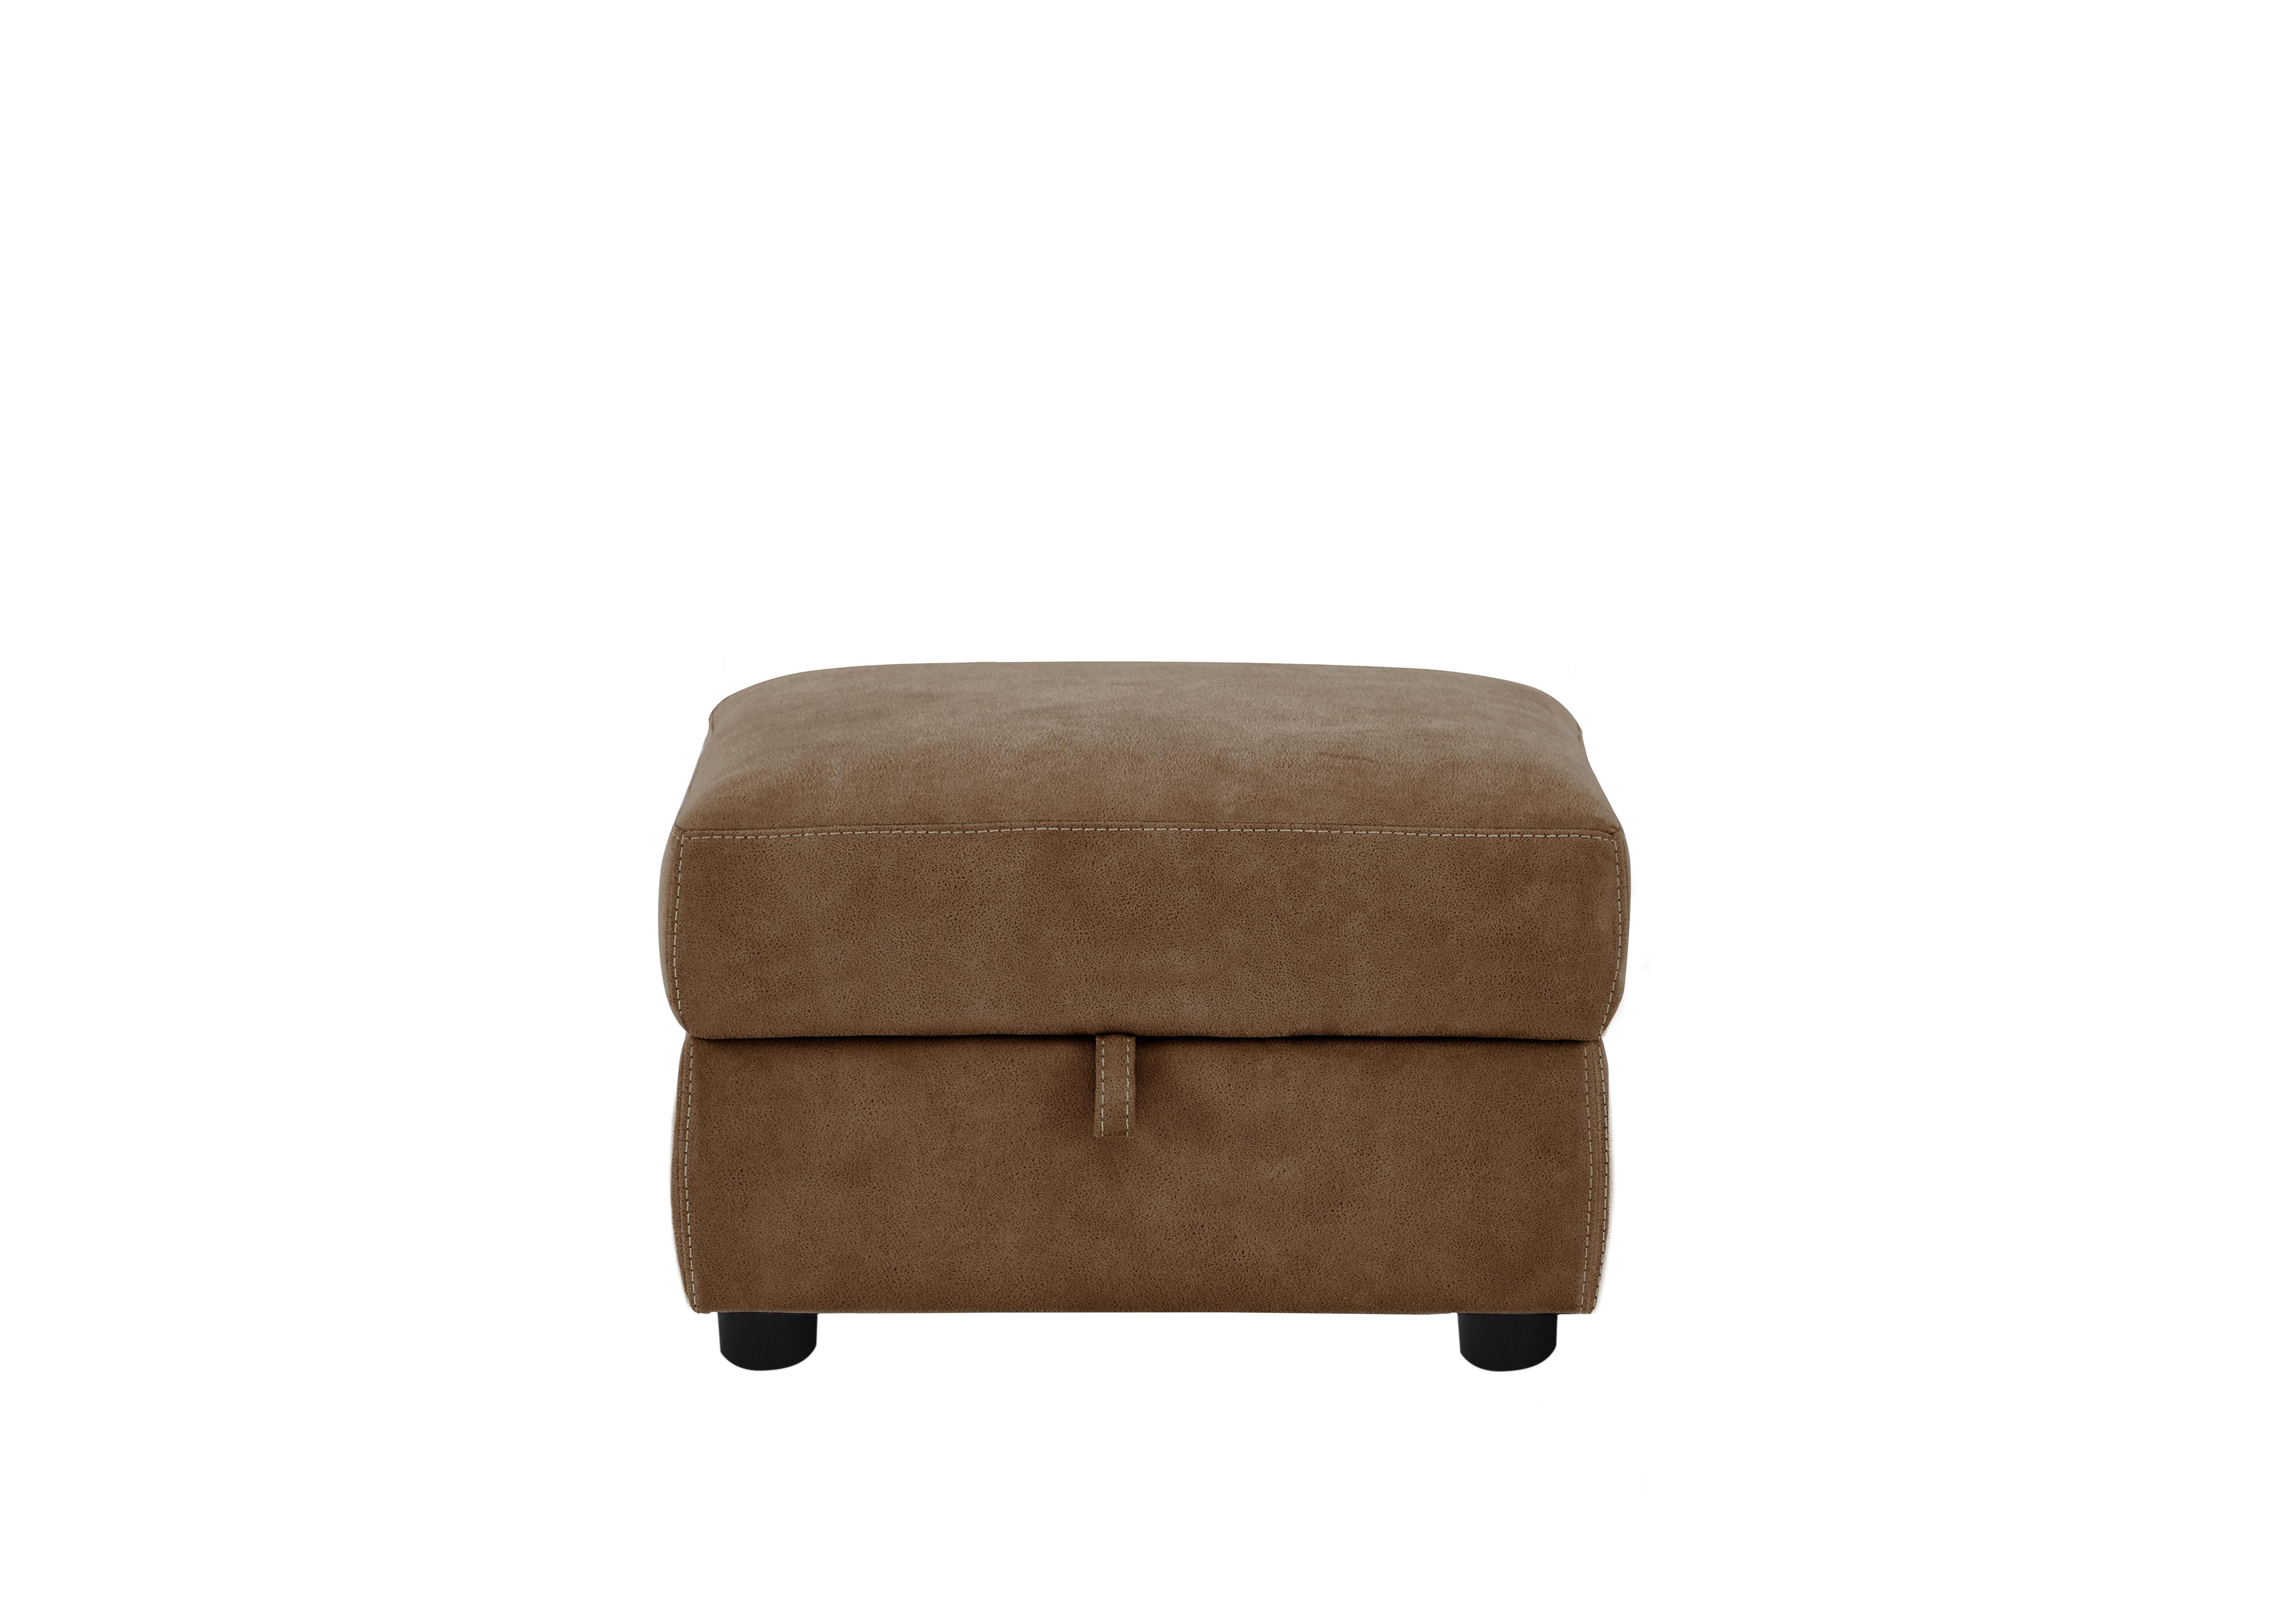 Snug Fabric Storage Footstool in Bfa-Blj-R05 Hazelnut on Furniture Village